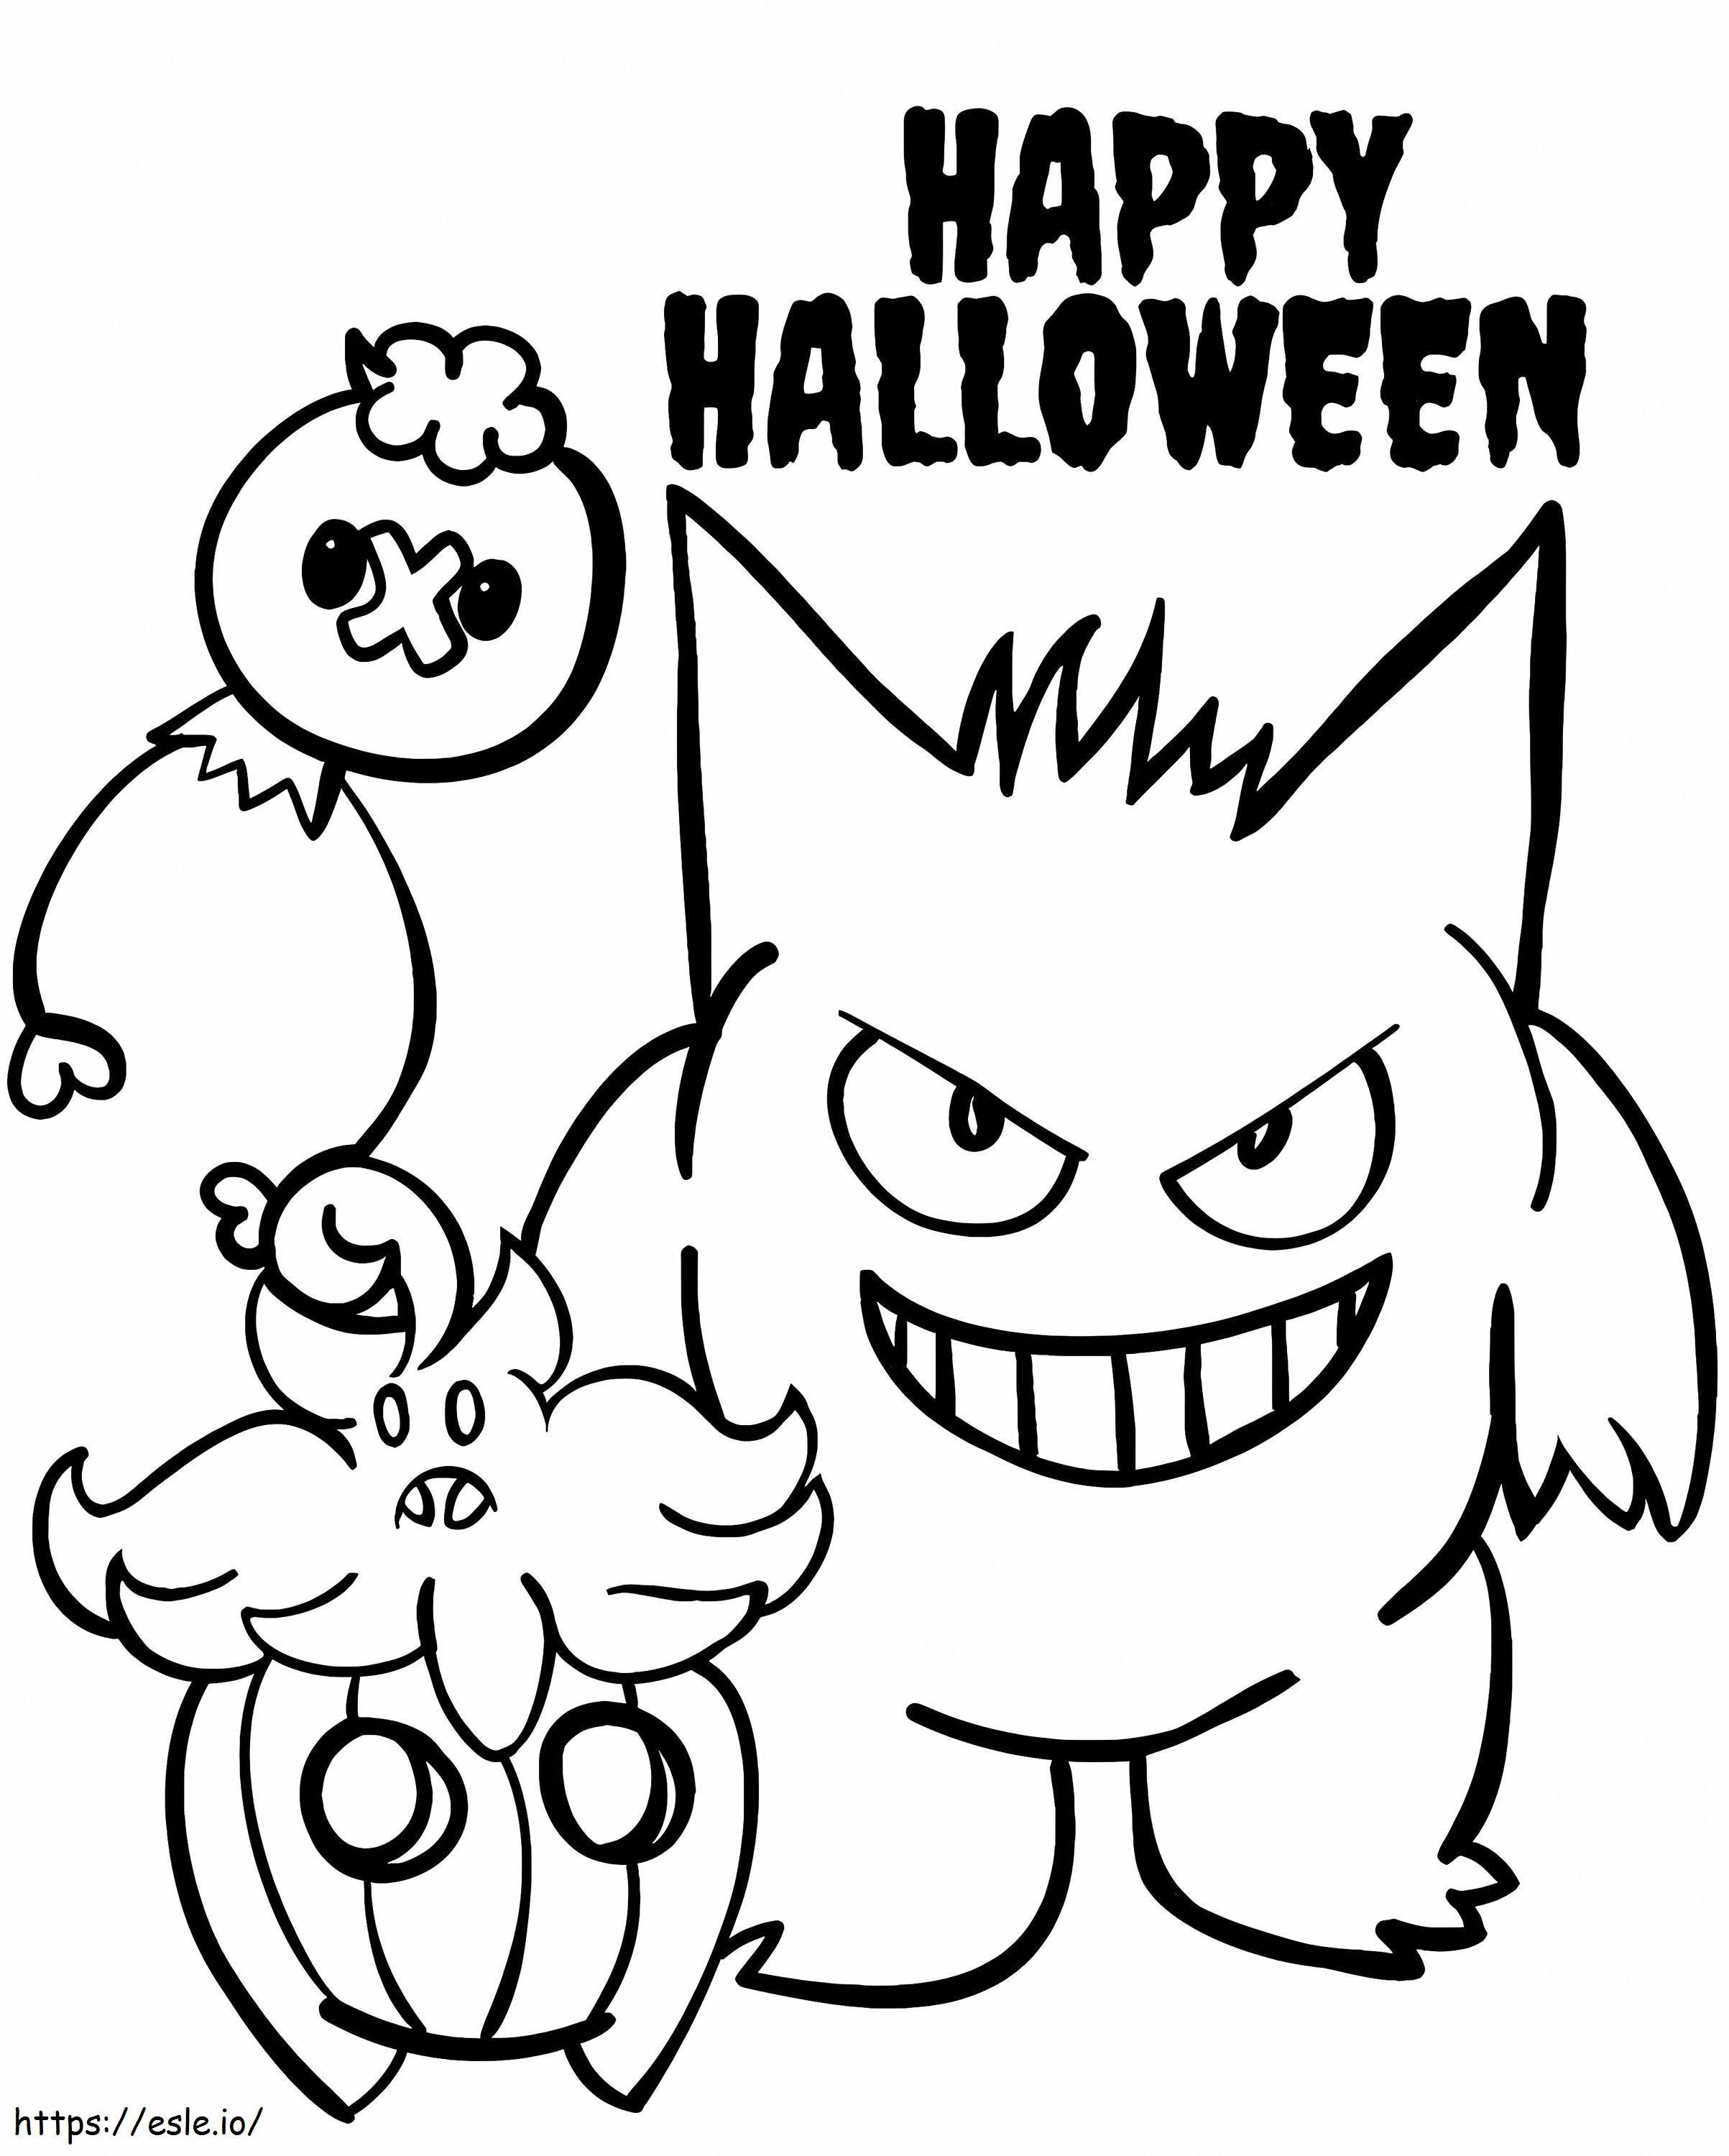 Imprimir Pokémon Halloween para colorear